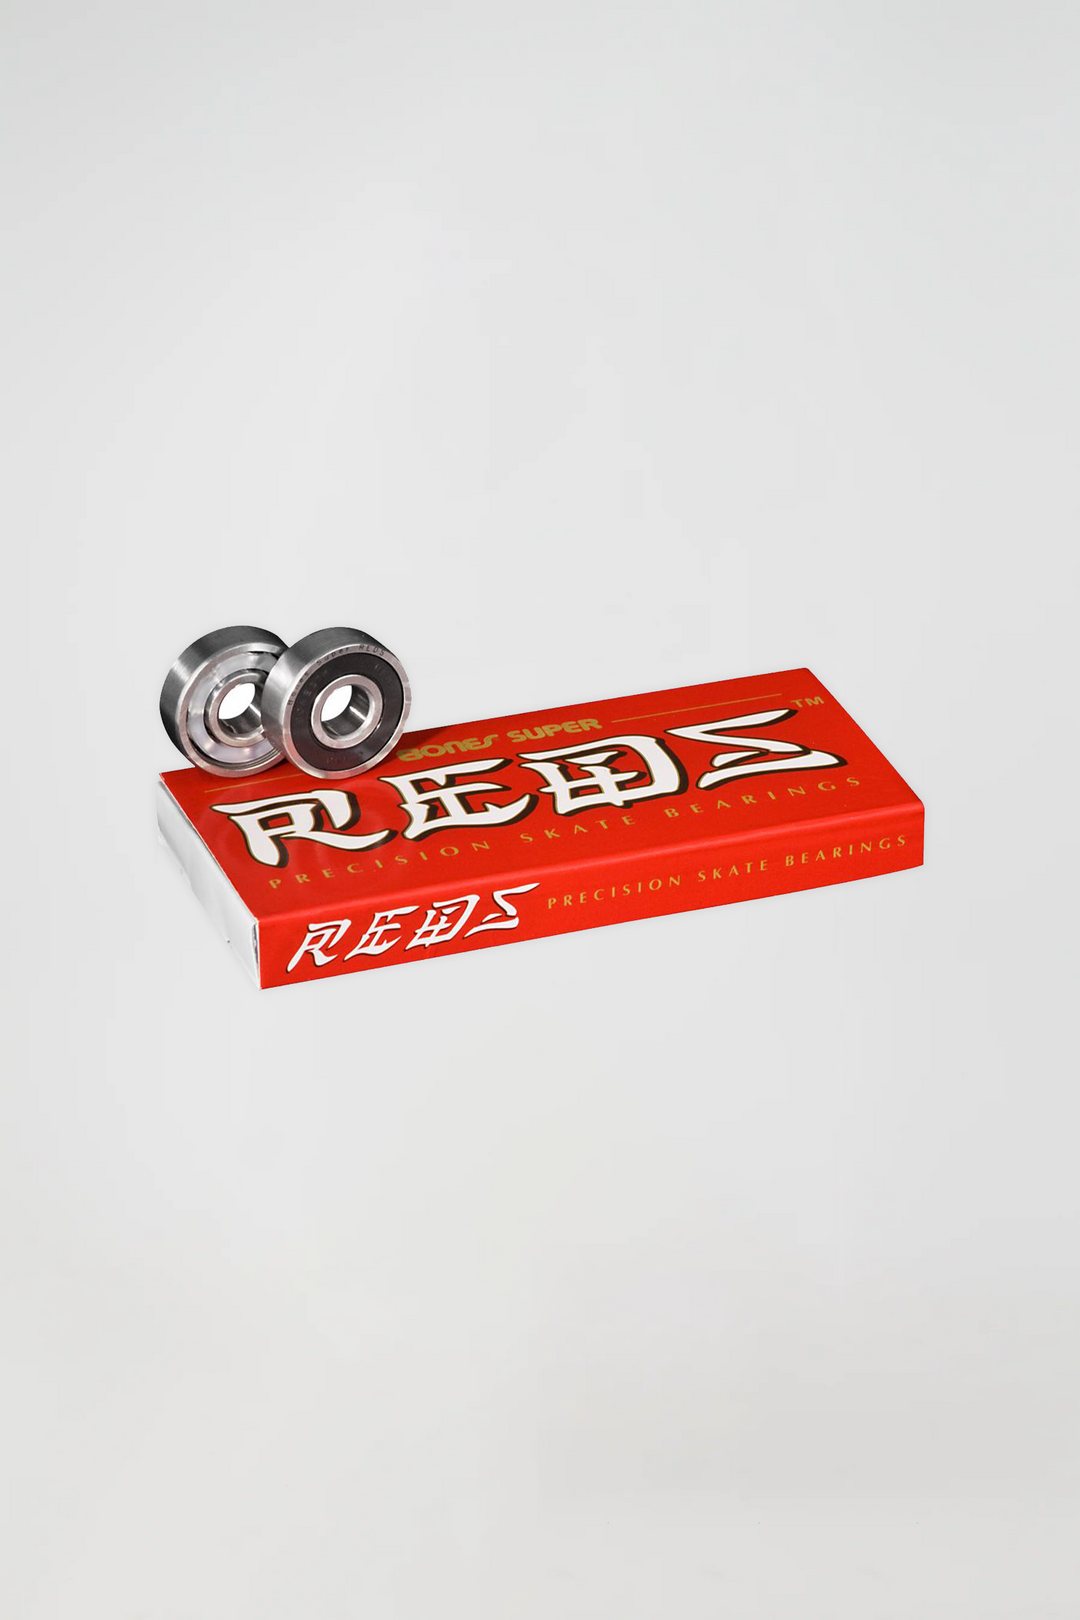 BONES® Super REDS® Skateboard Bearings